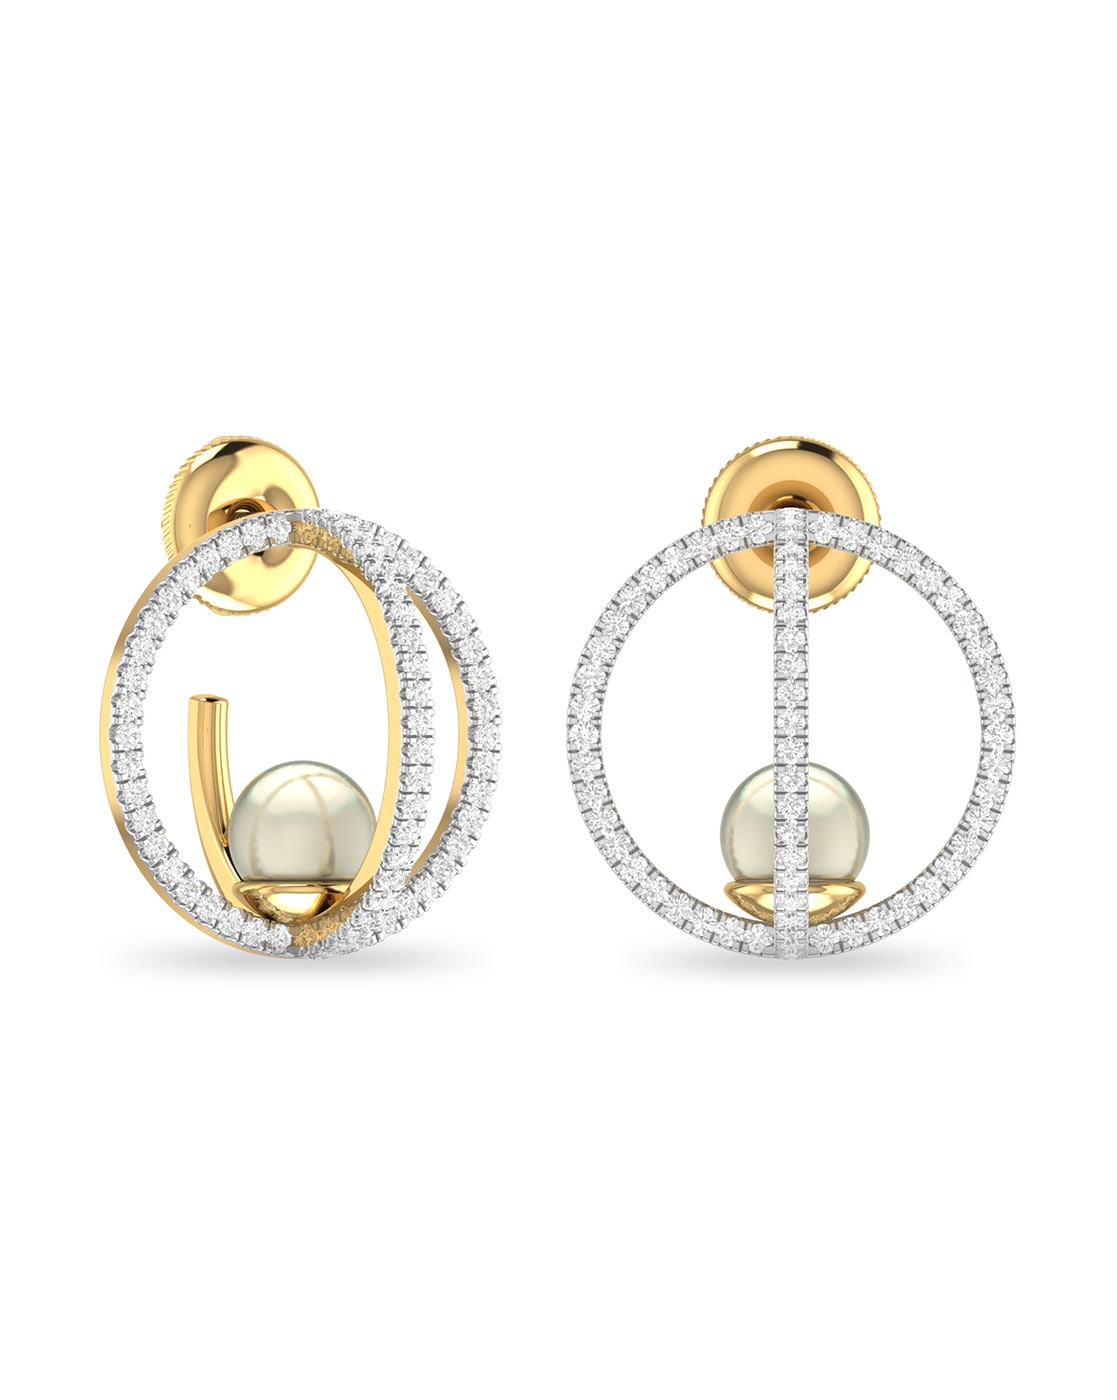 Gold And Diamond Earrings Dubai | Liali Jewellery